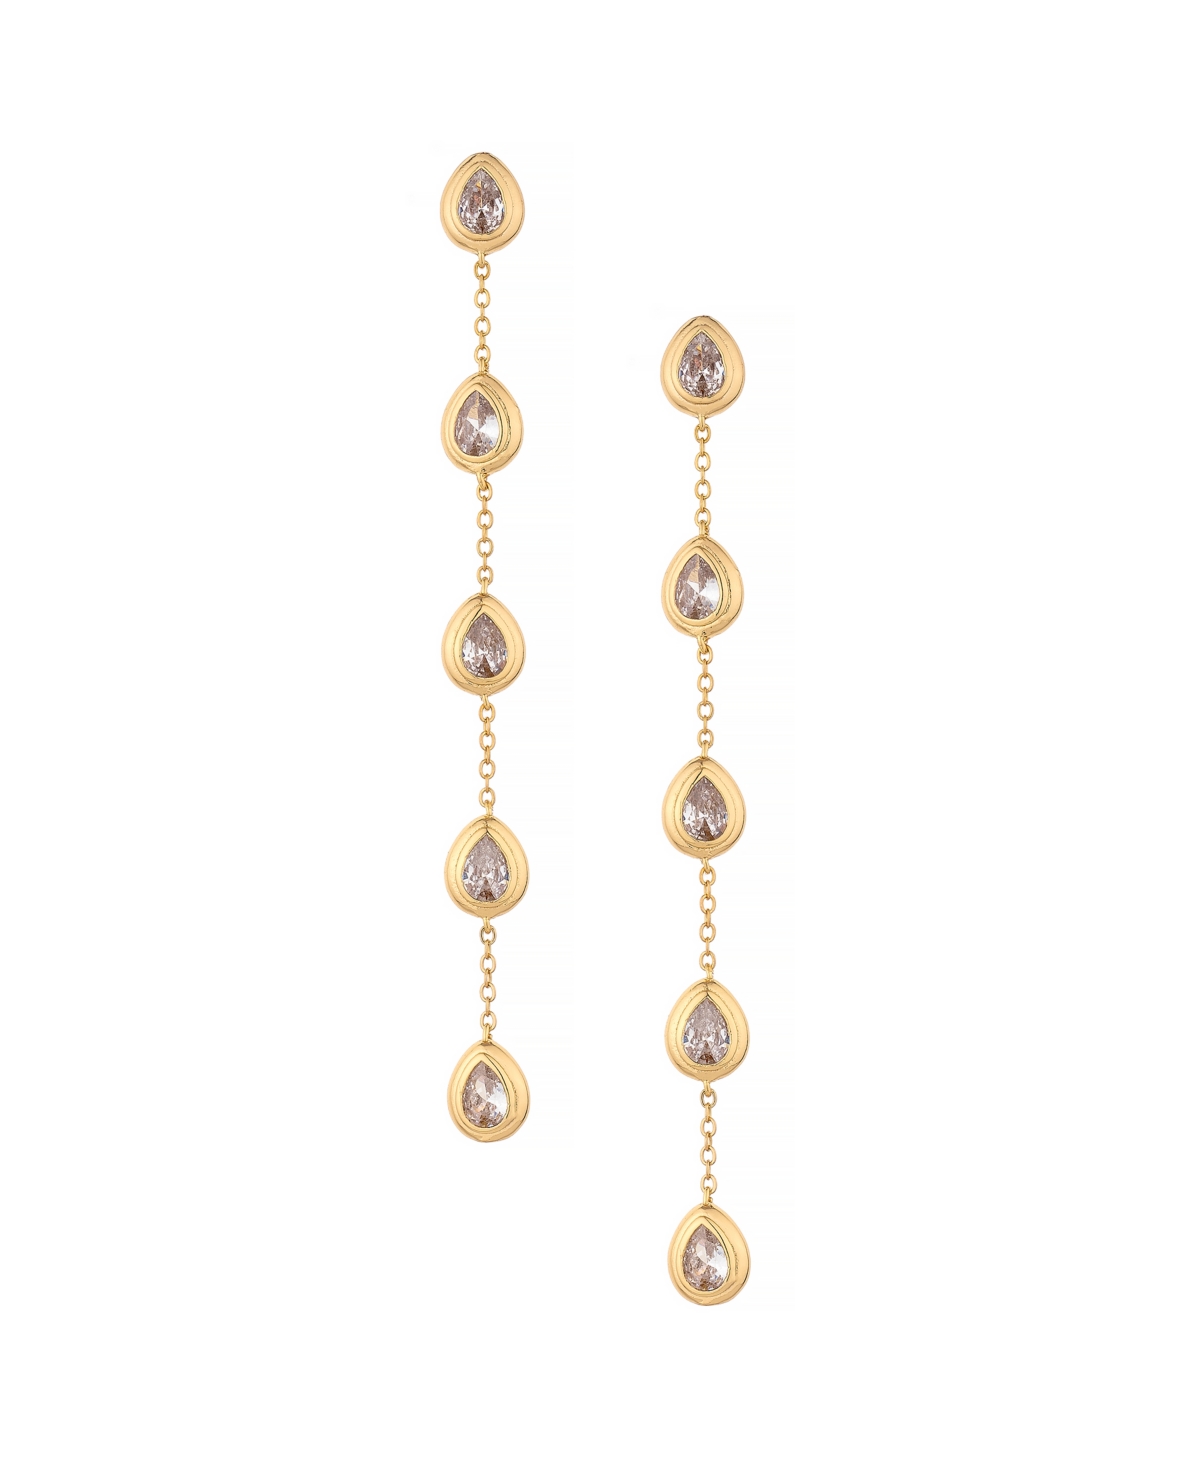 Multi-Crystal Teardrop Earrings in 18K Gold Plating - Gold